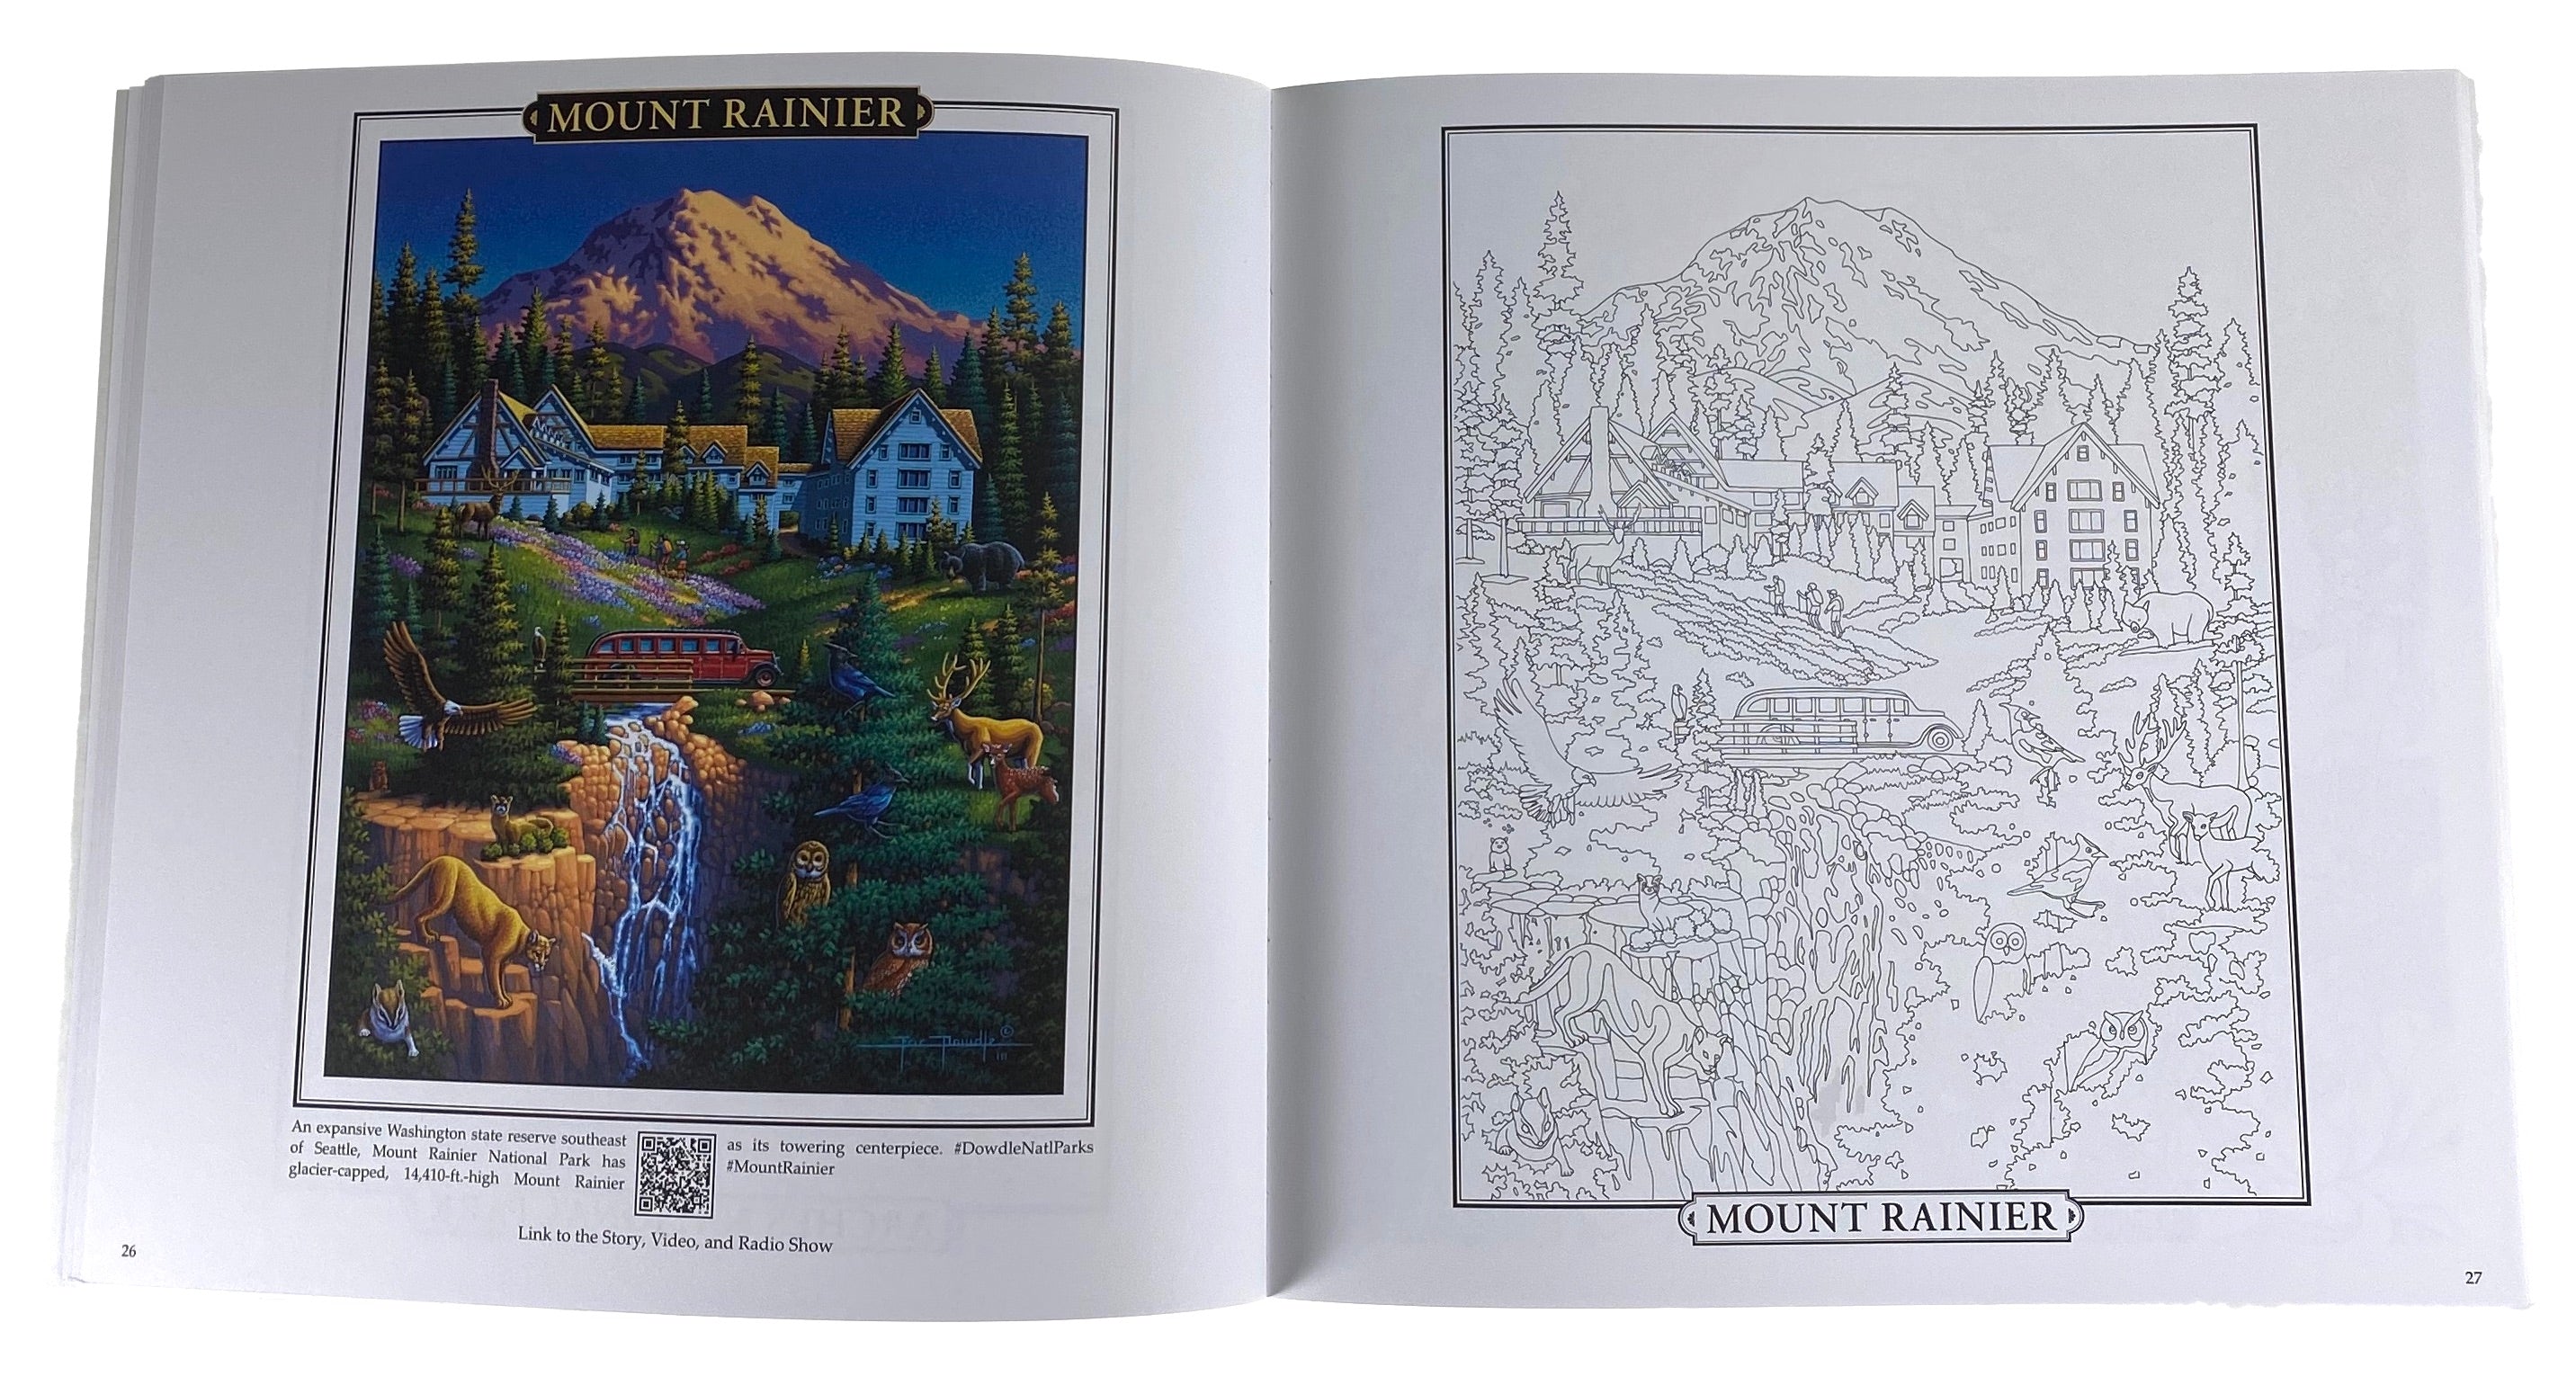 Dowdle Doodles National Parks Coloring Book    